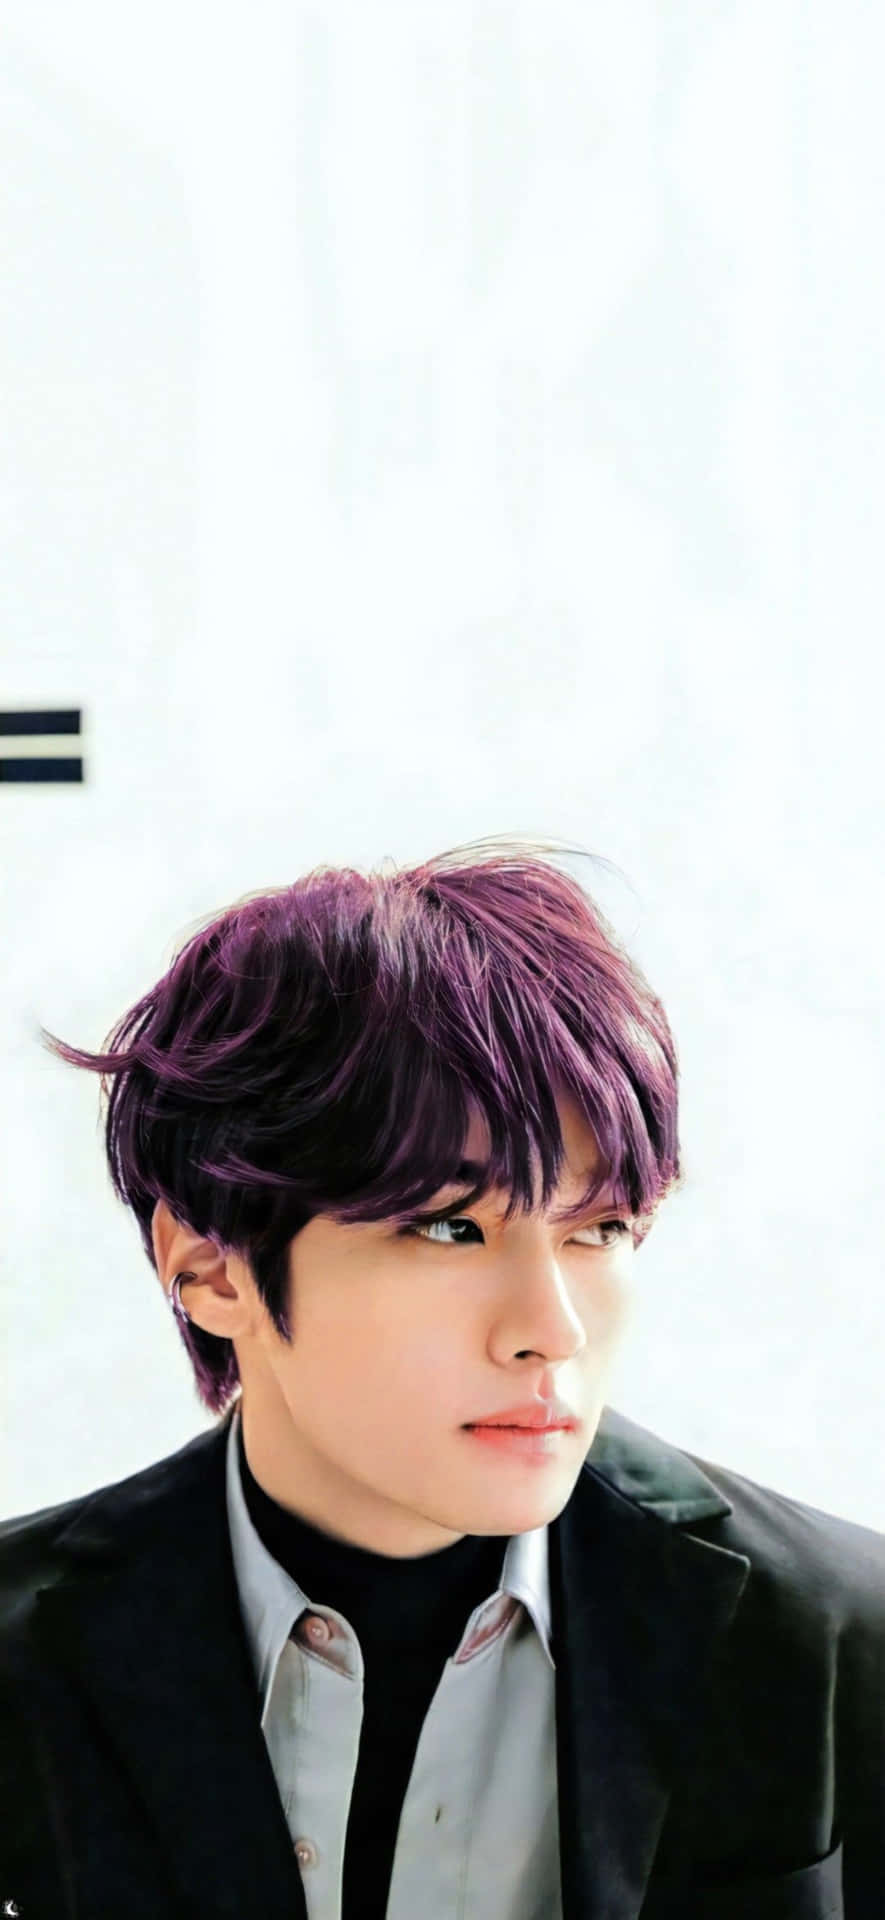 Lee Know Purple Hair Portrait Wallpaper